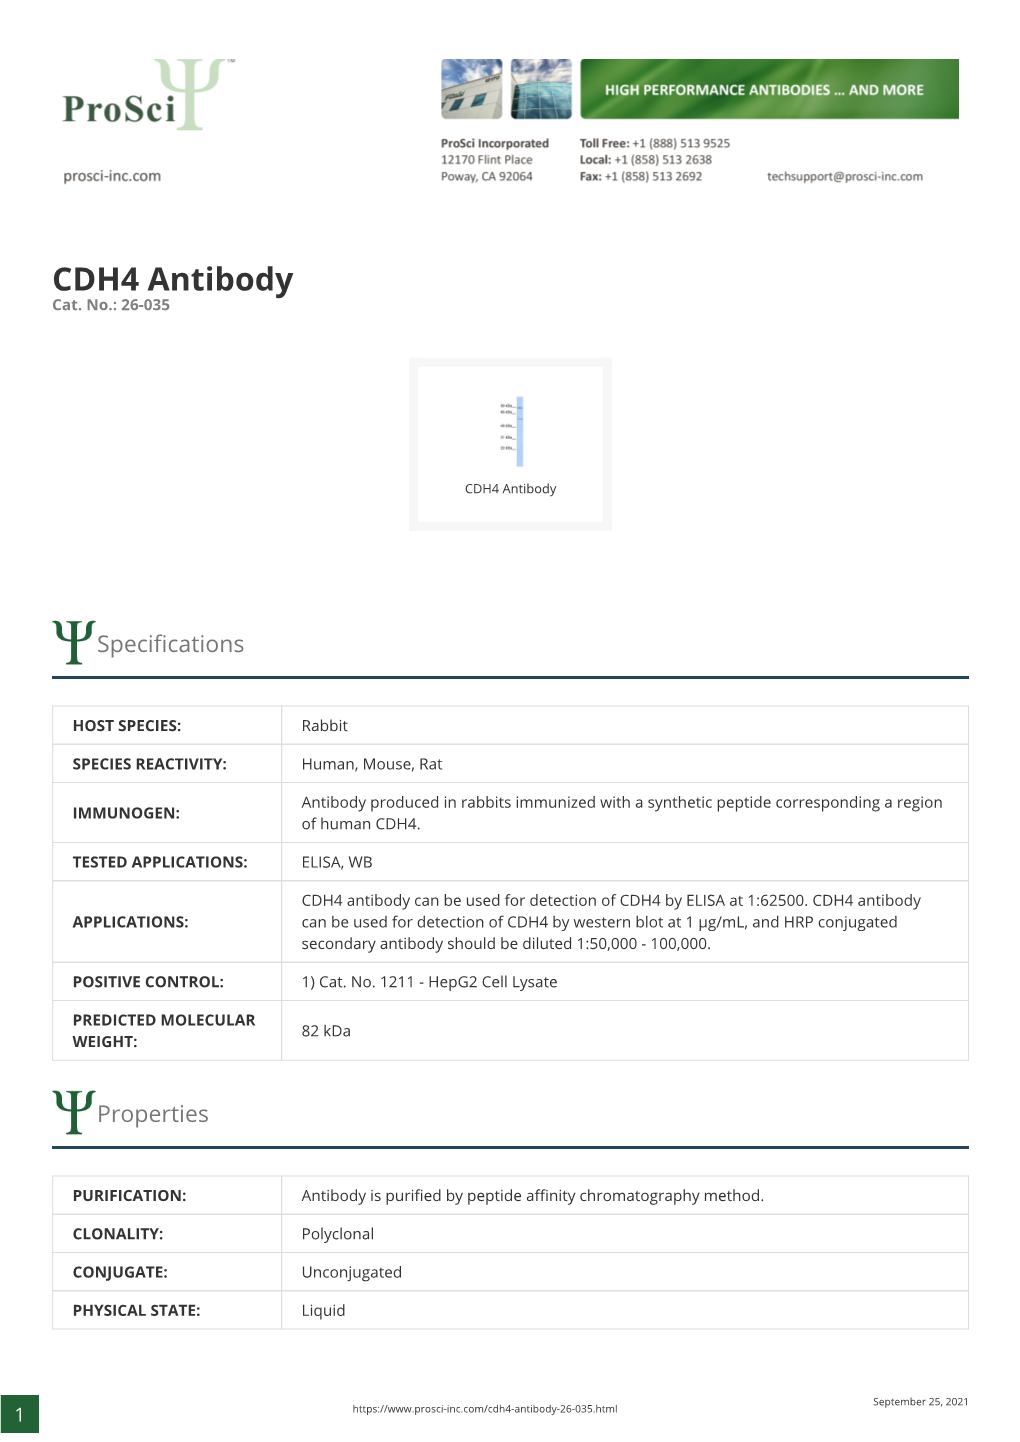 CDH4 Antibody Cat